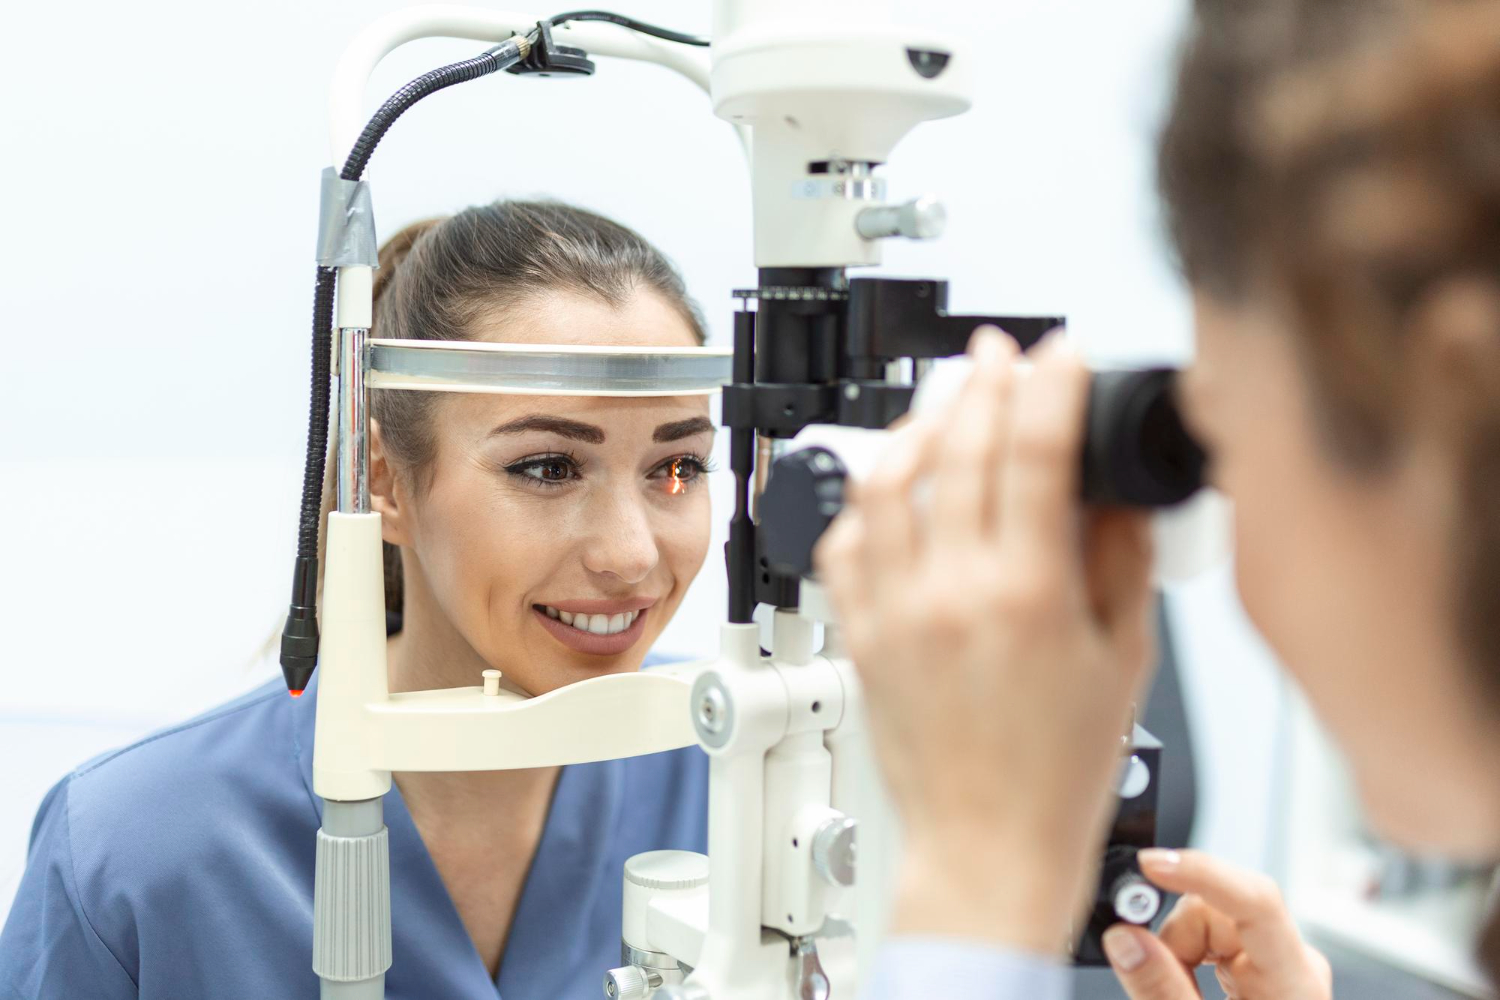 LASIK eye surgery (Laser-Assisted in Situ Keratomileusis)